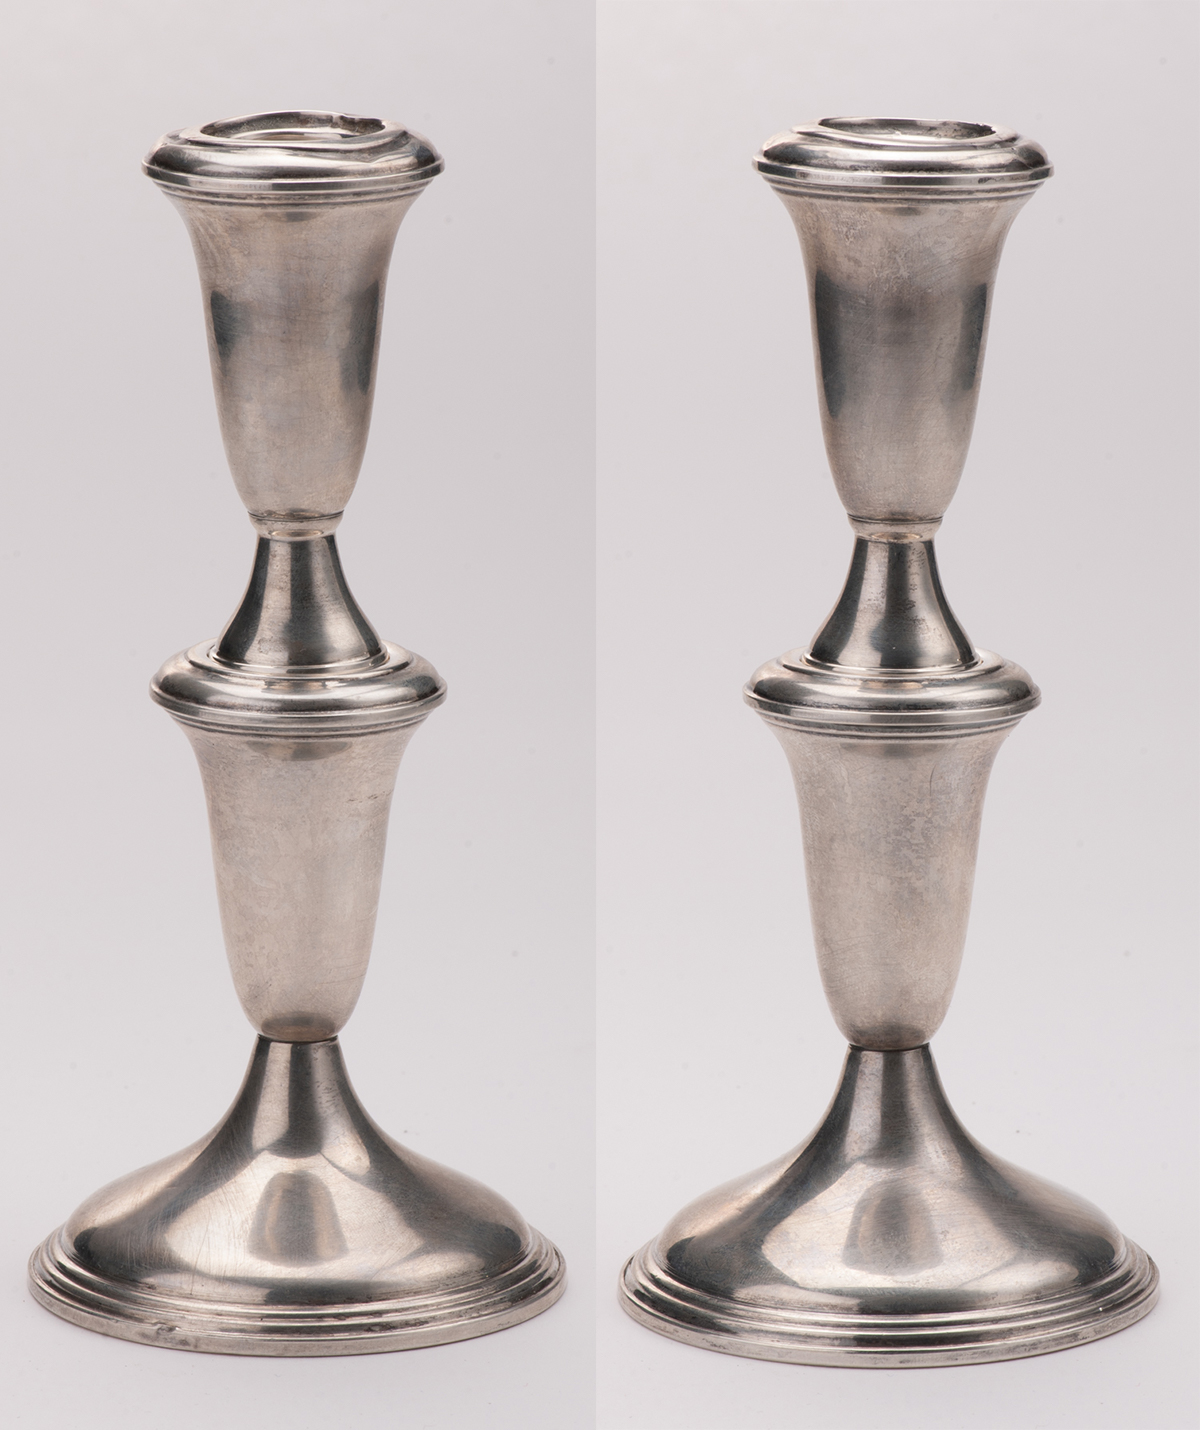 Elegant candlestick in silver